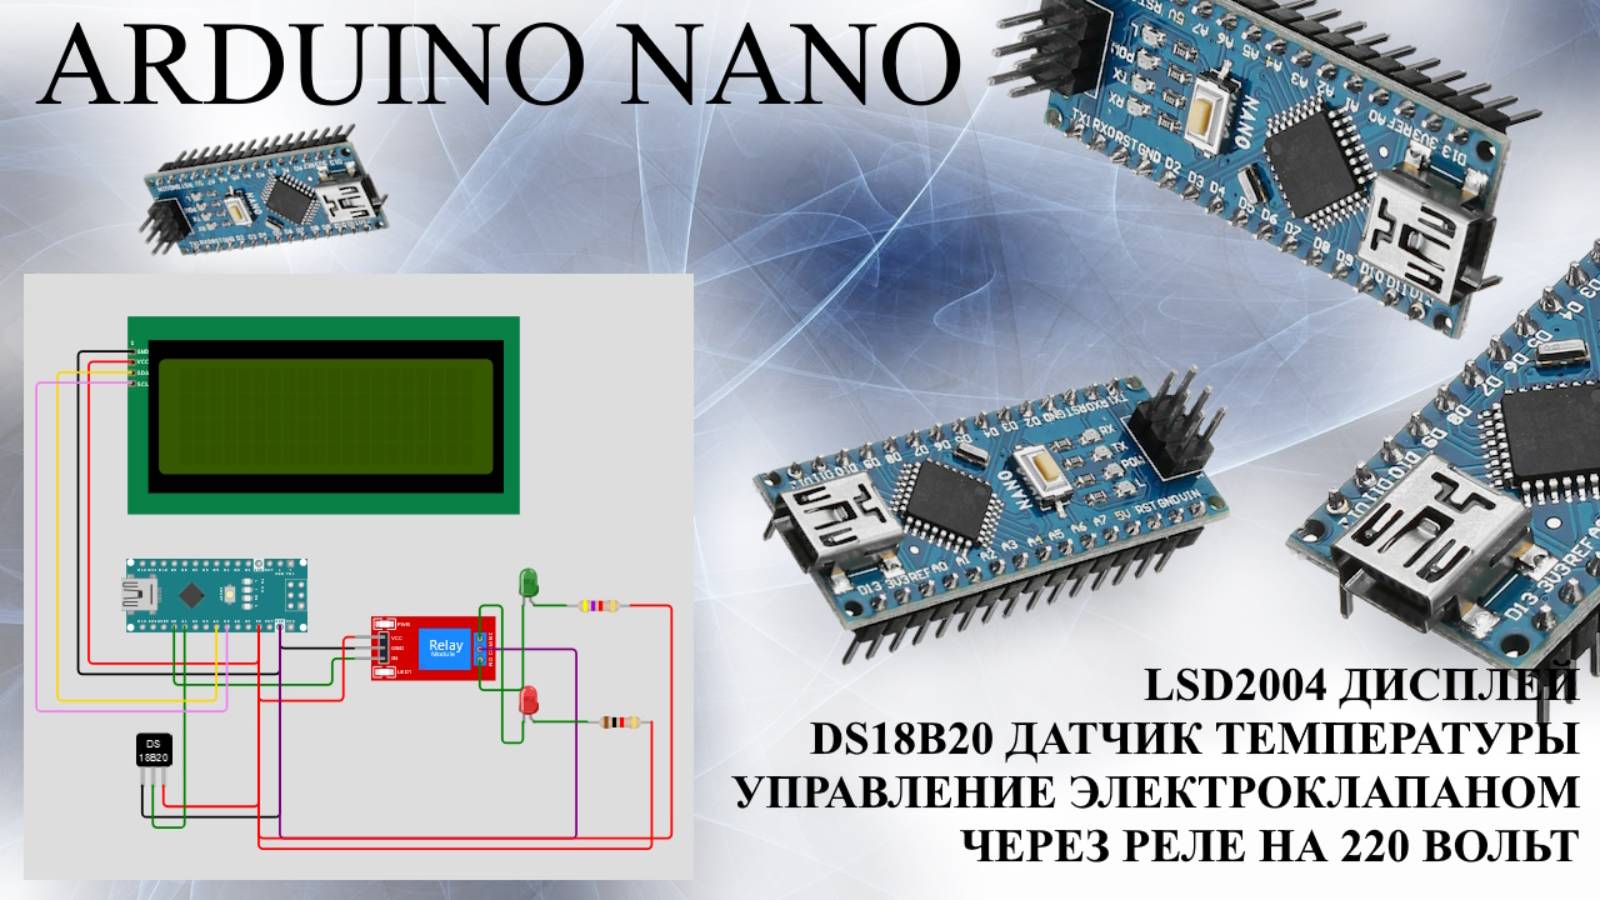 Управление электрическим клапаном микроконтроллер ARDUINO Экран LCD2004 Датчик температуры DS18B20